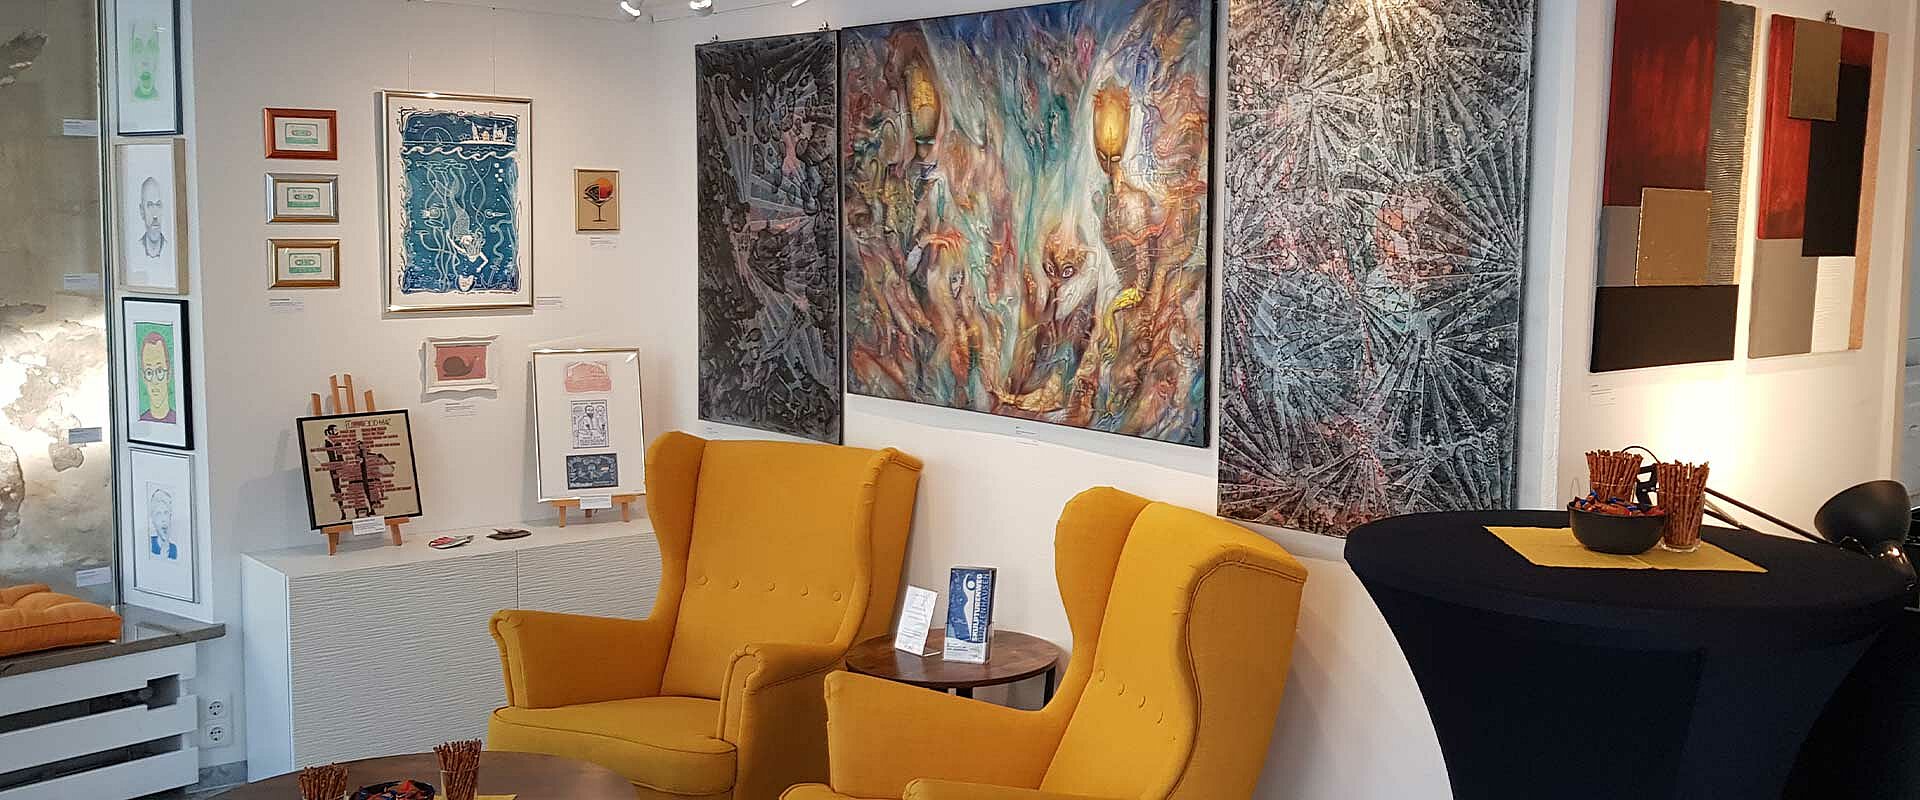 korridor.art | Lounge in der Galerie